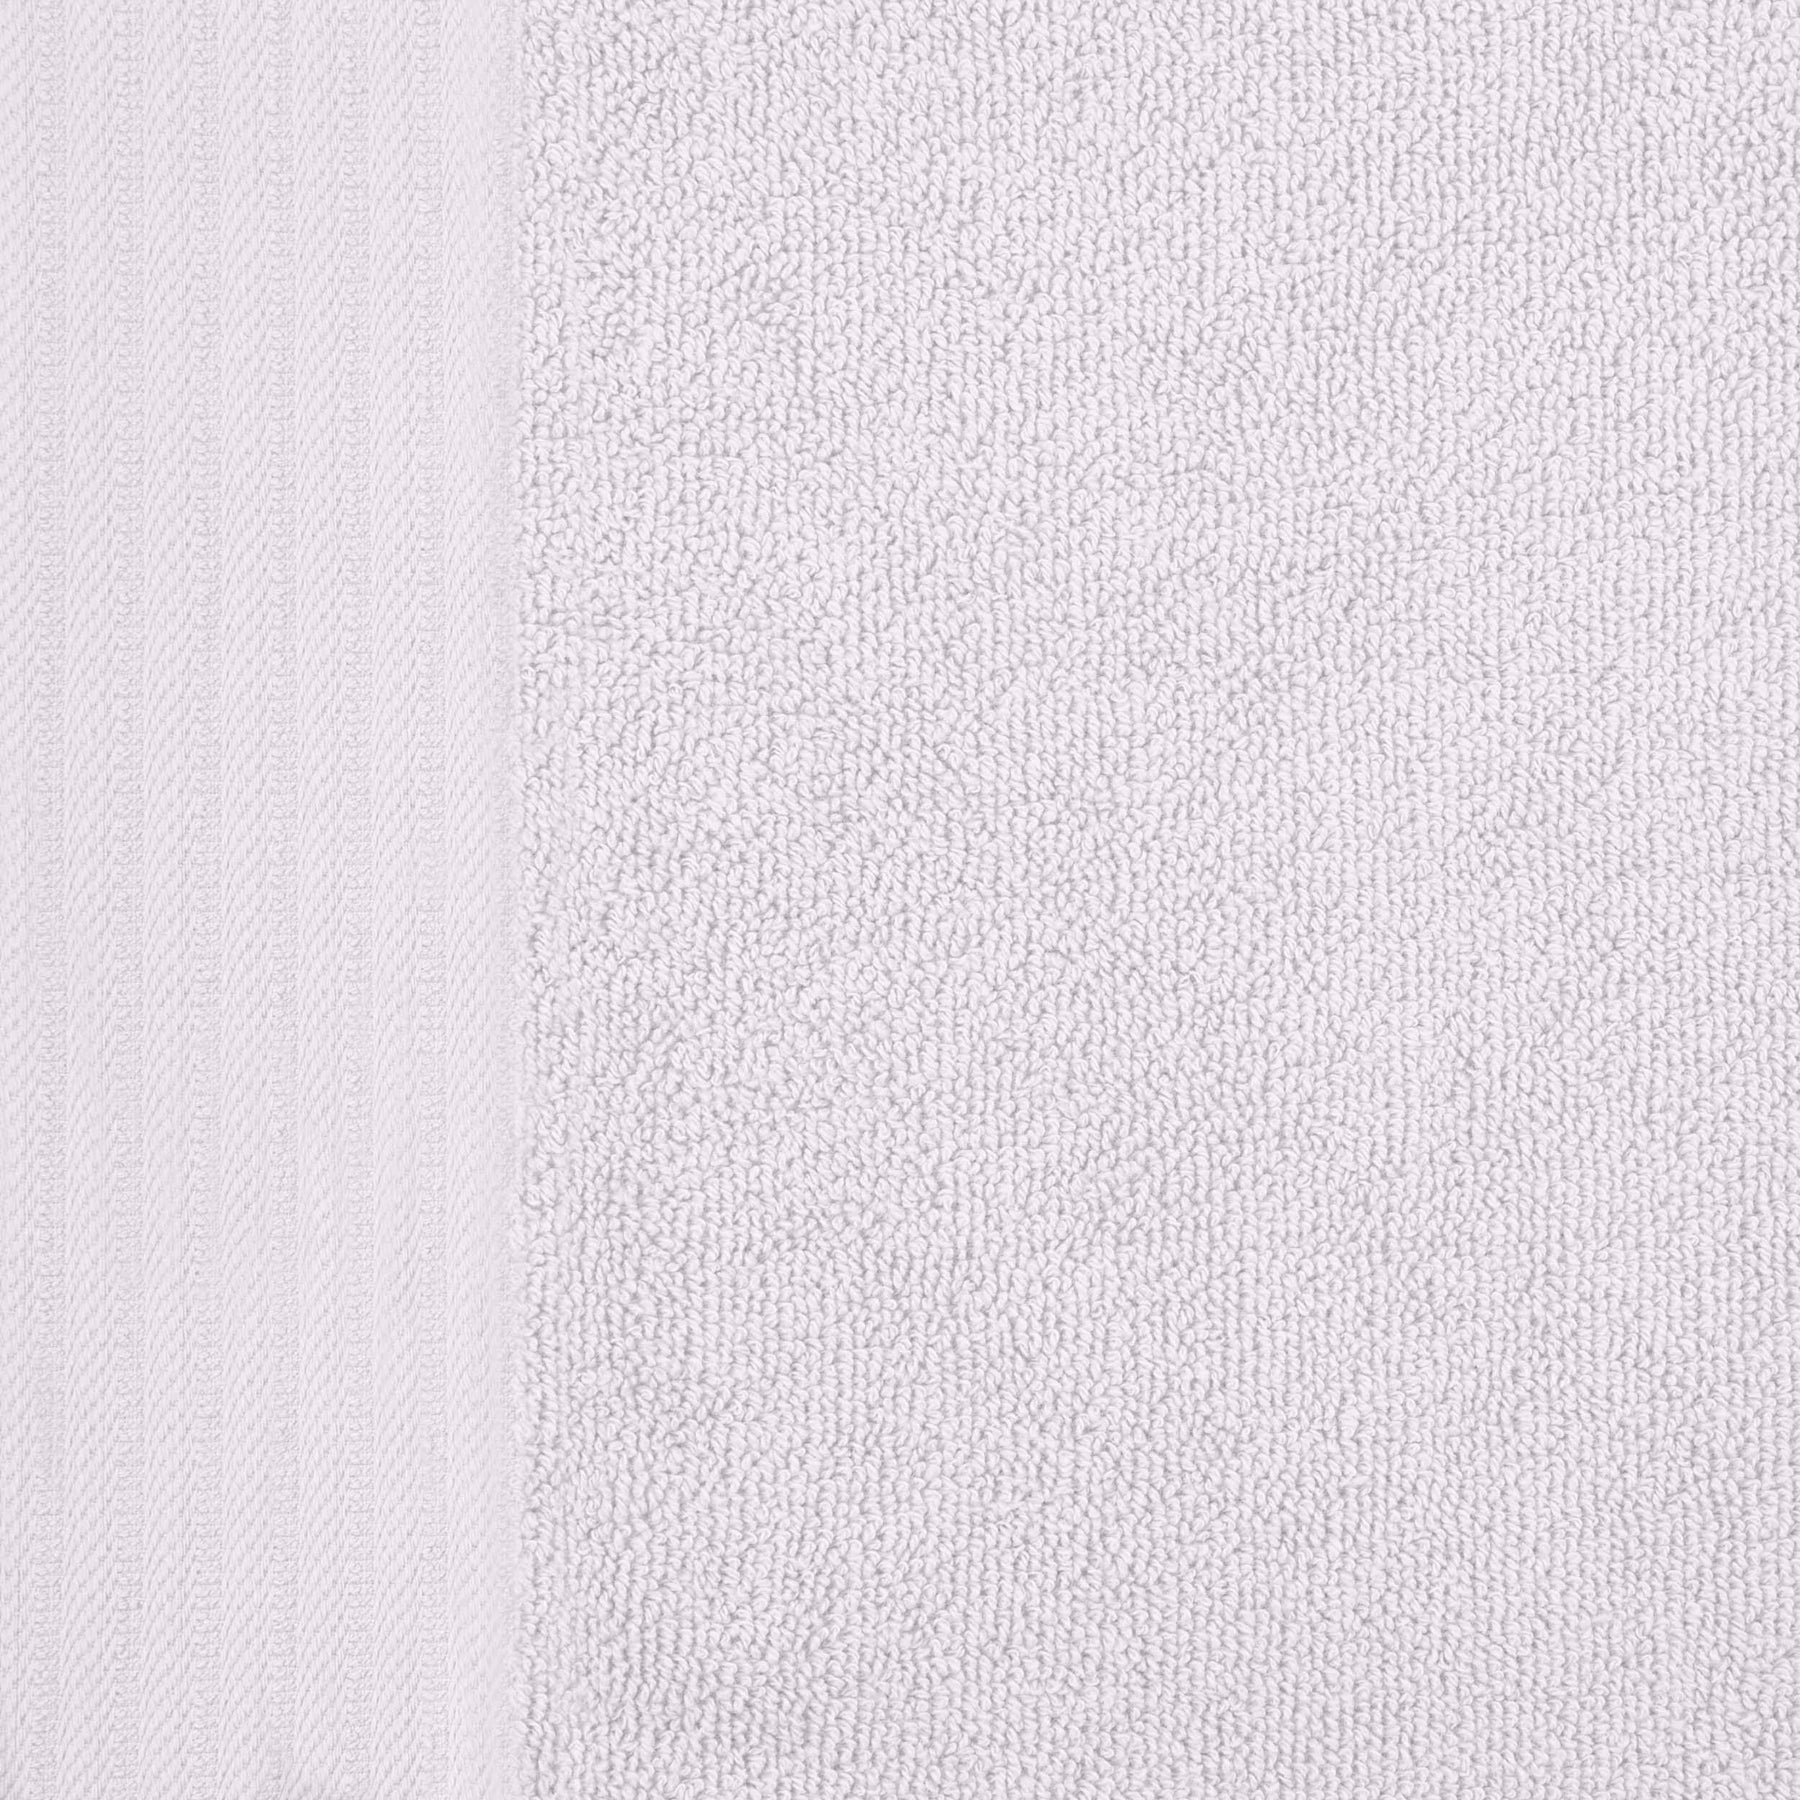 Premium Turkish Cotton Herringbone Solid Assorted 6 Piece Towel Set - Towel Set by Superior - Superior 